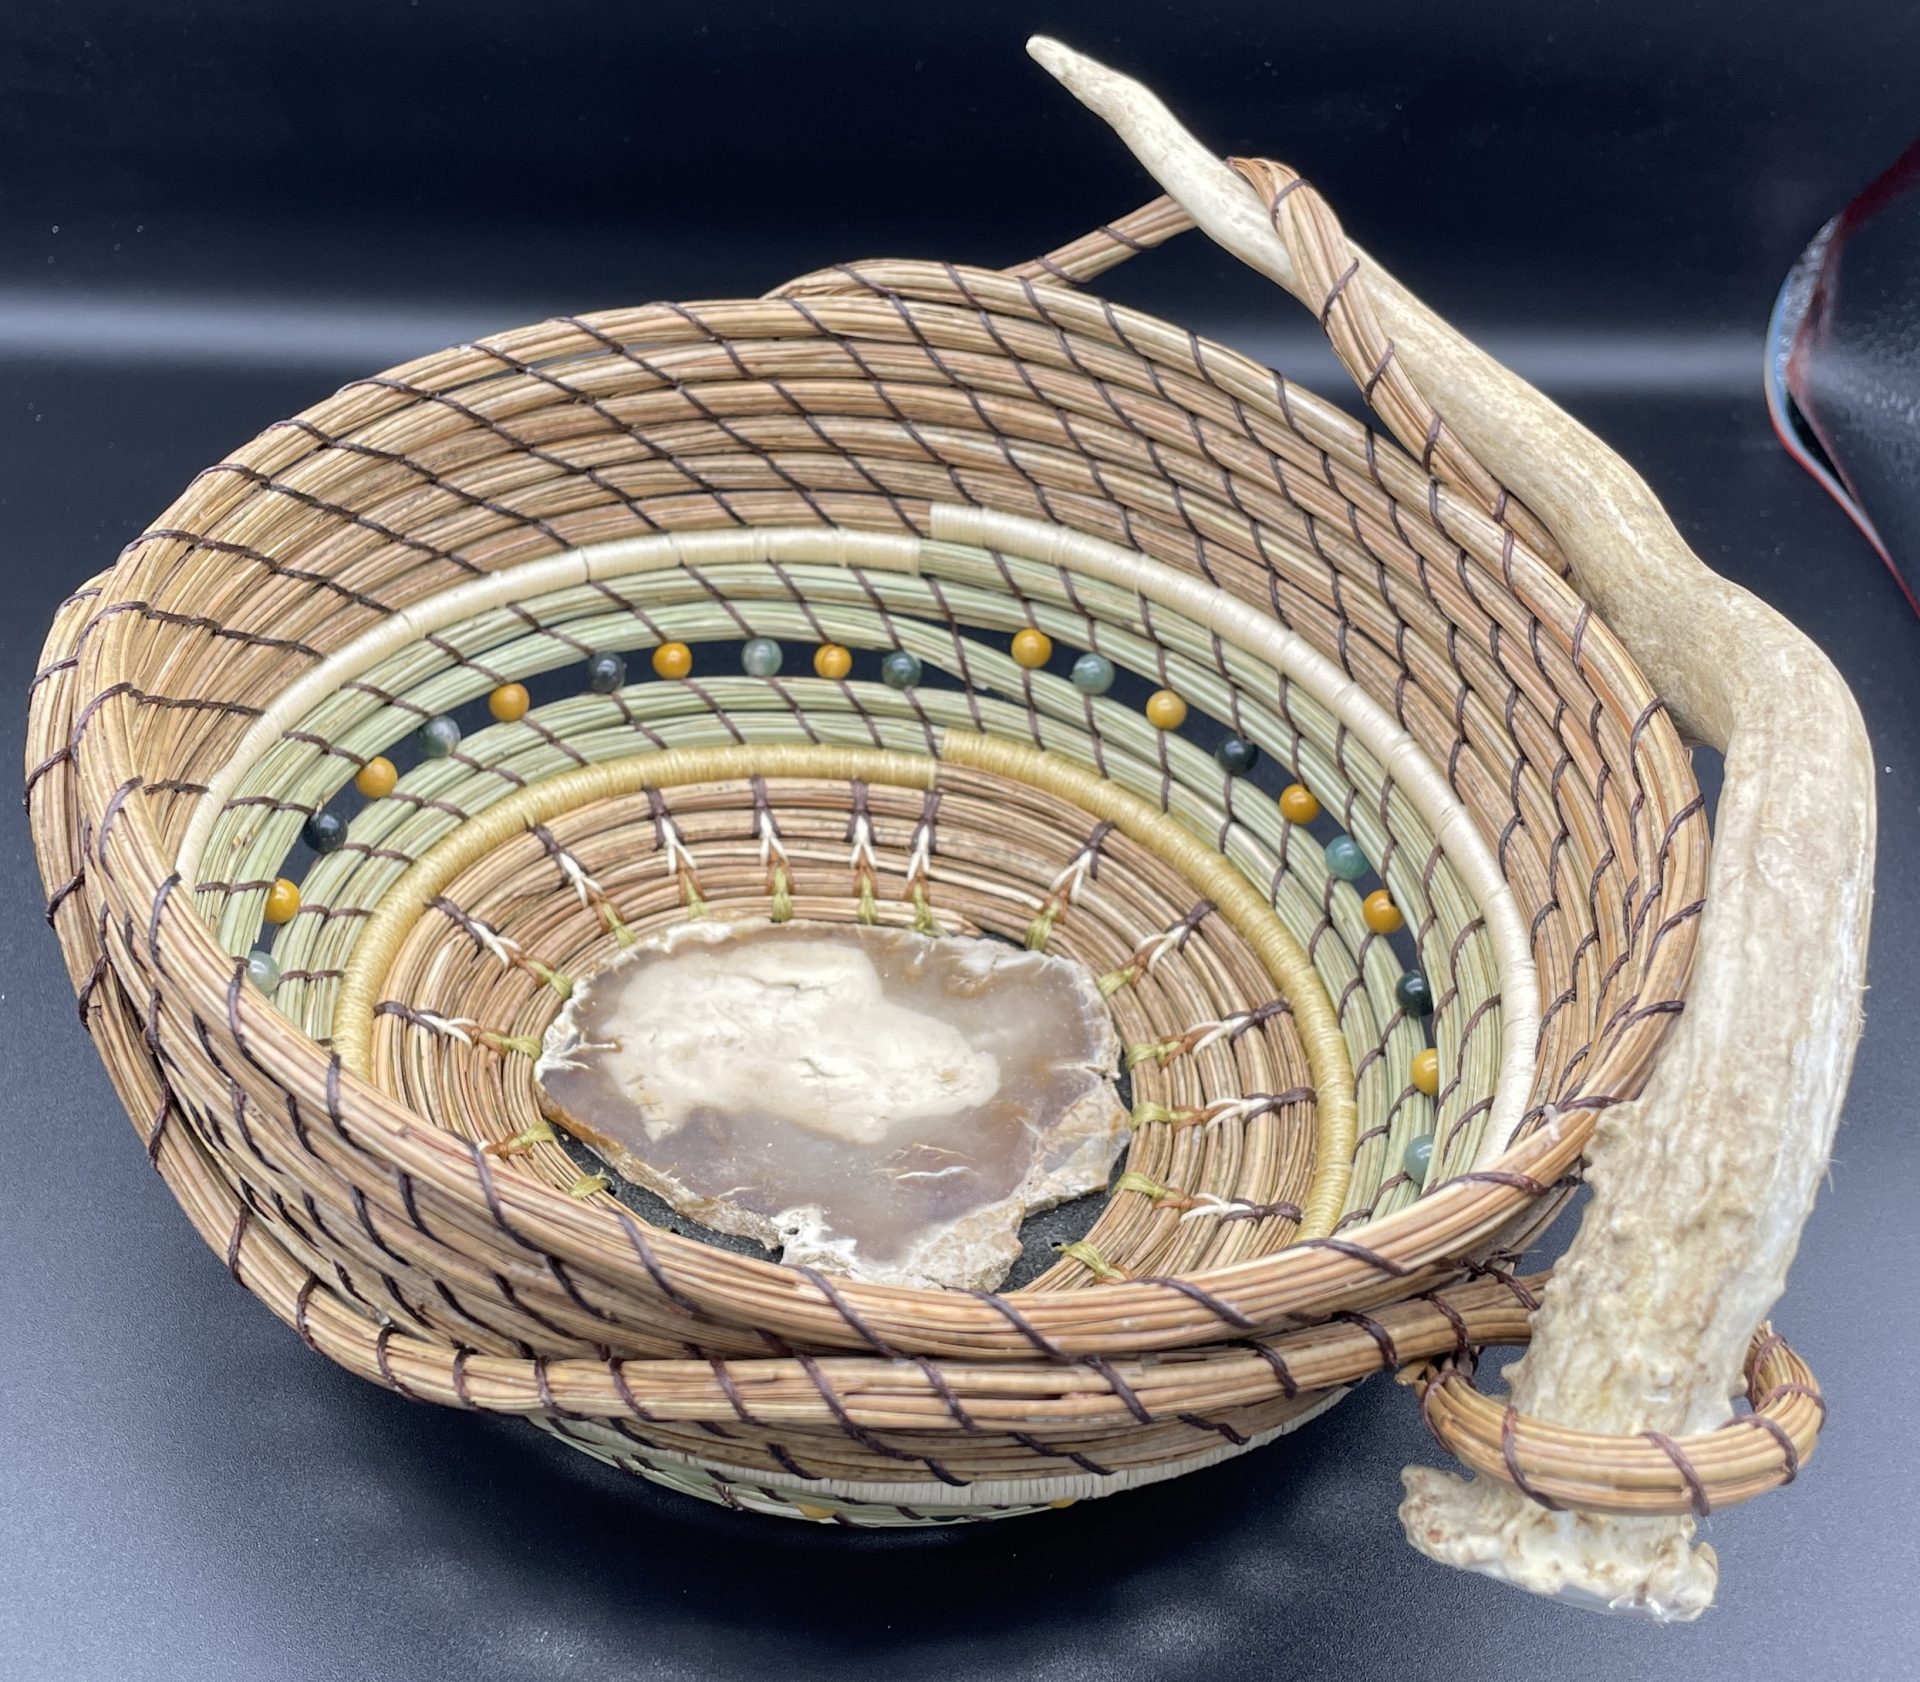 Petrified wood base basket with deer antler